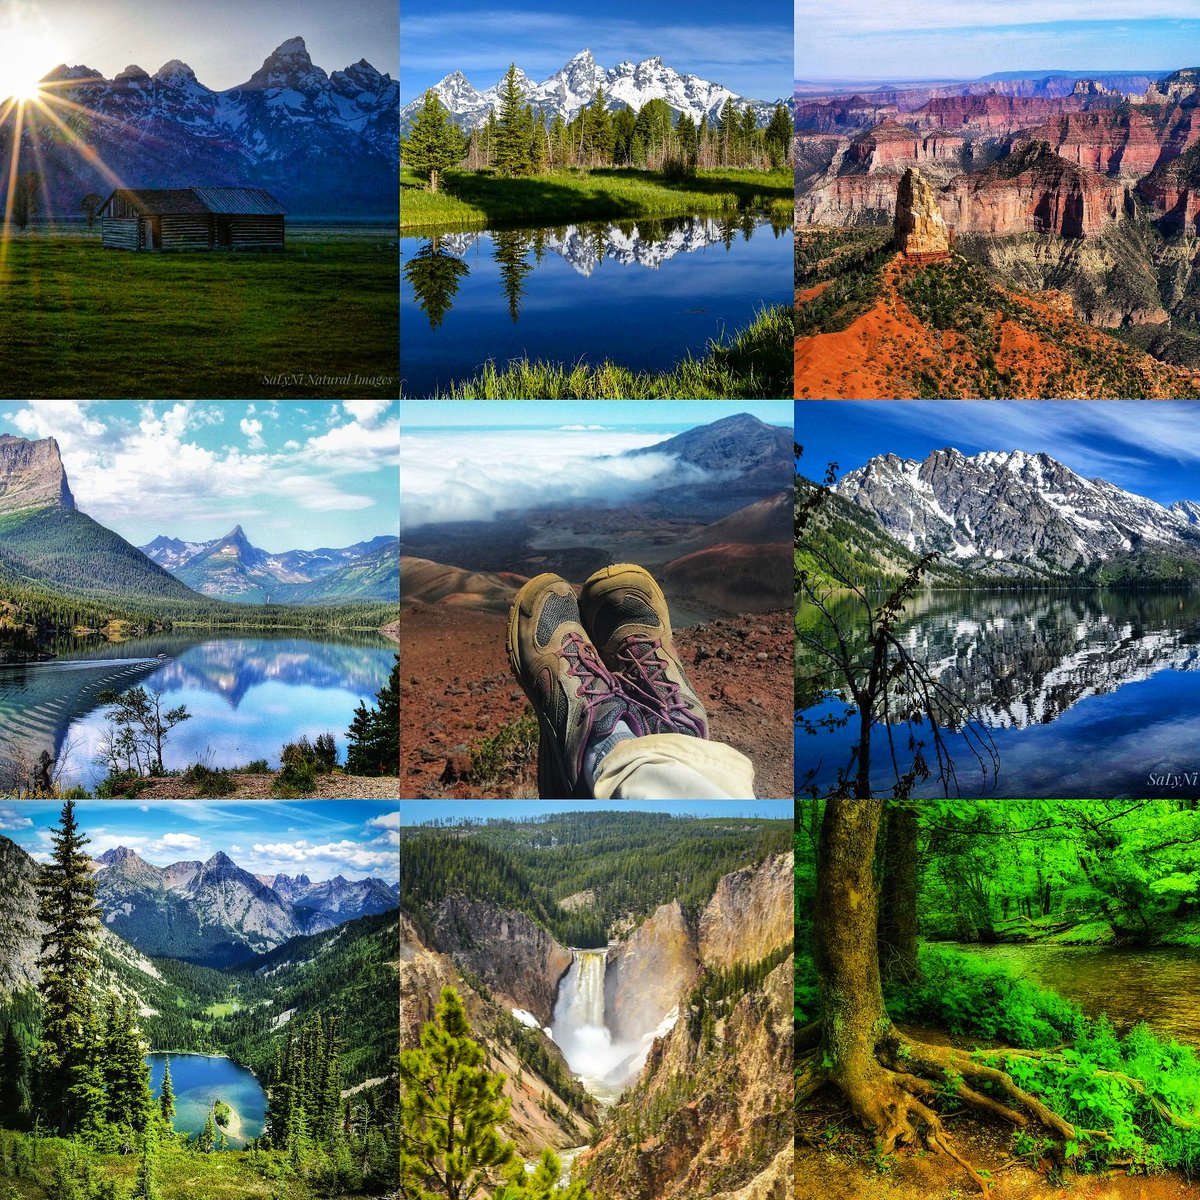 Happy 102 National Parks!! 😍
#americasbestidea #FindYourPark #NPS102 
#NPSBirthday #publiclands 
@Interior @NP_Geek @NPCA 
@ParksTraveler @goexploreparks @ThePhotoHour